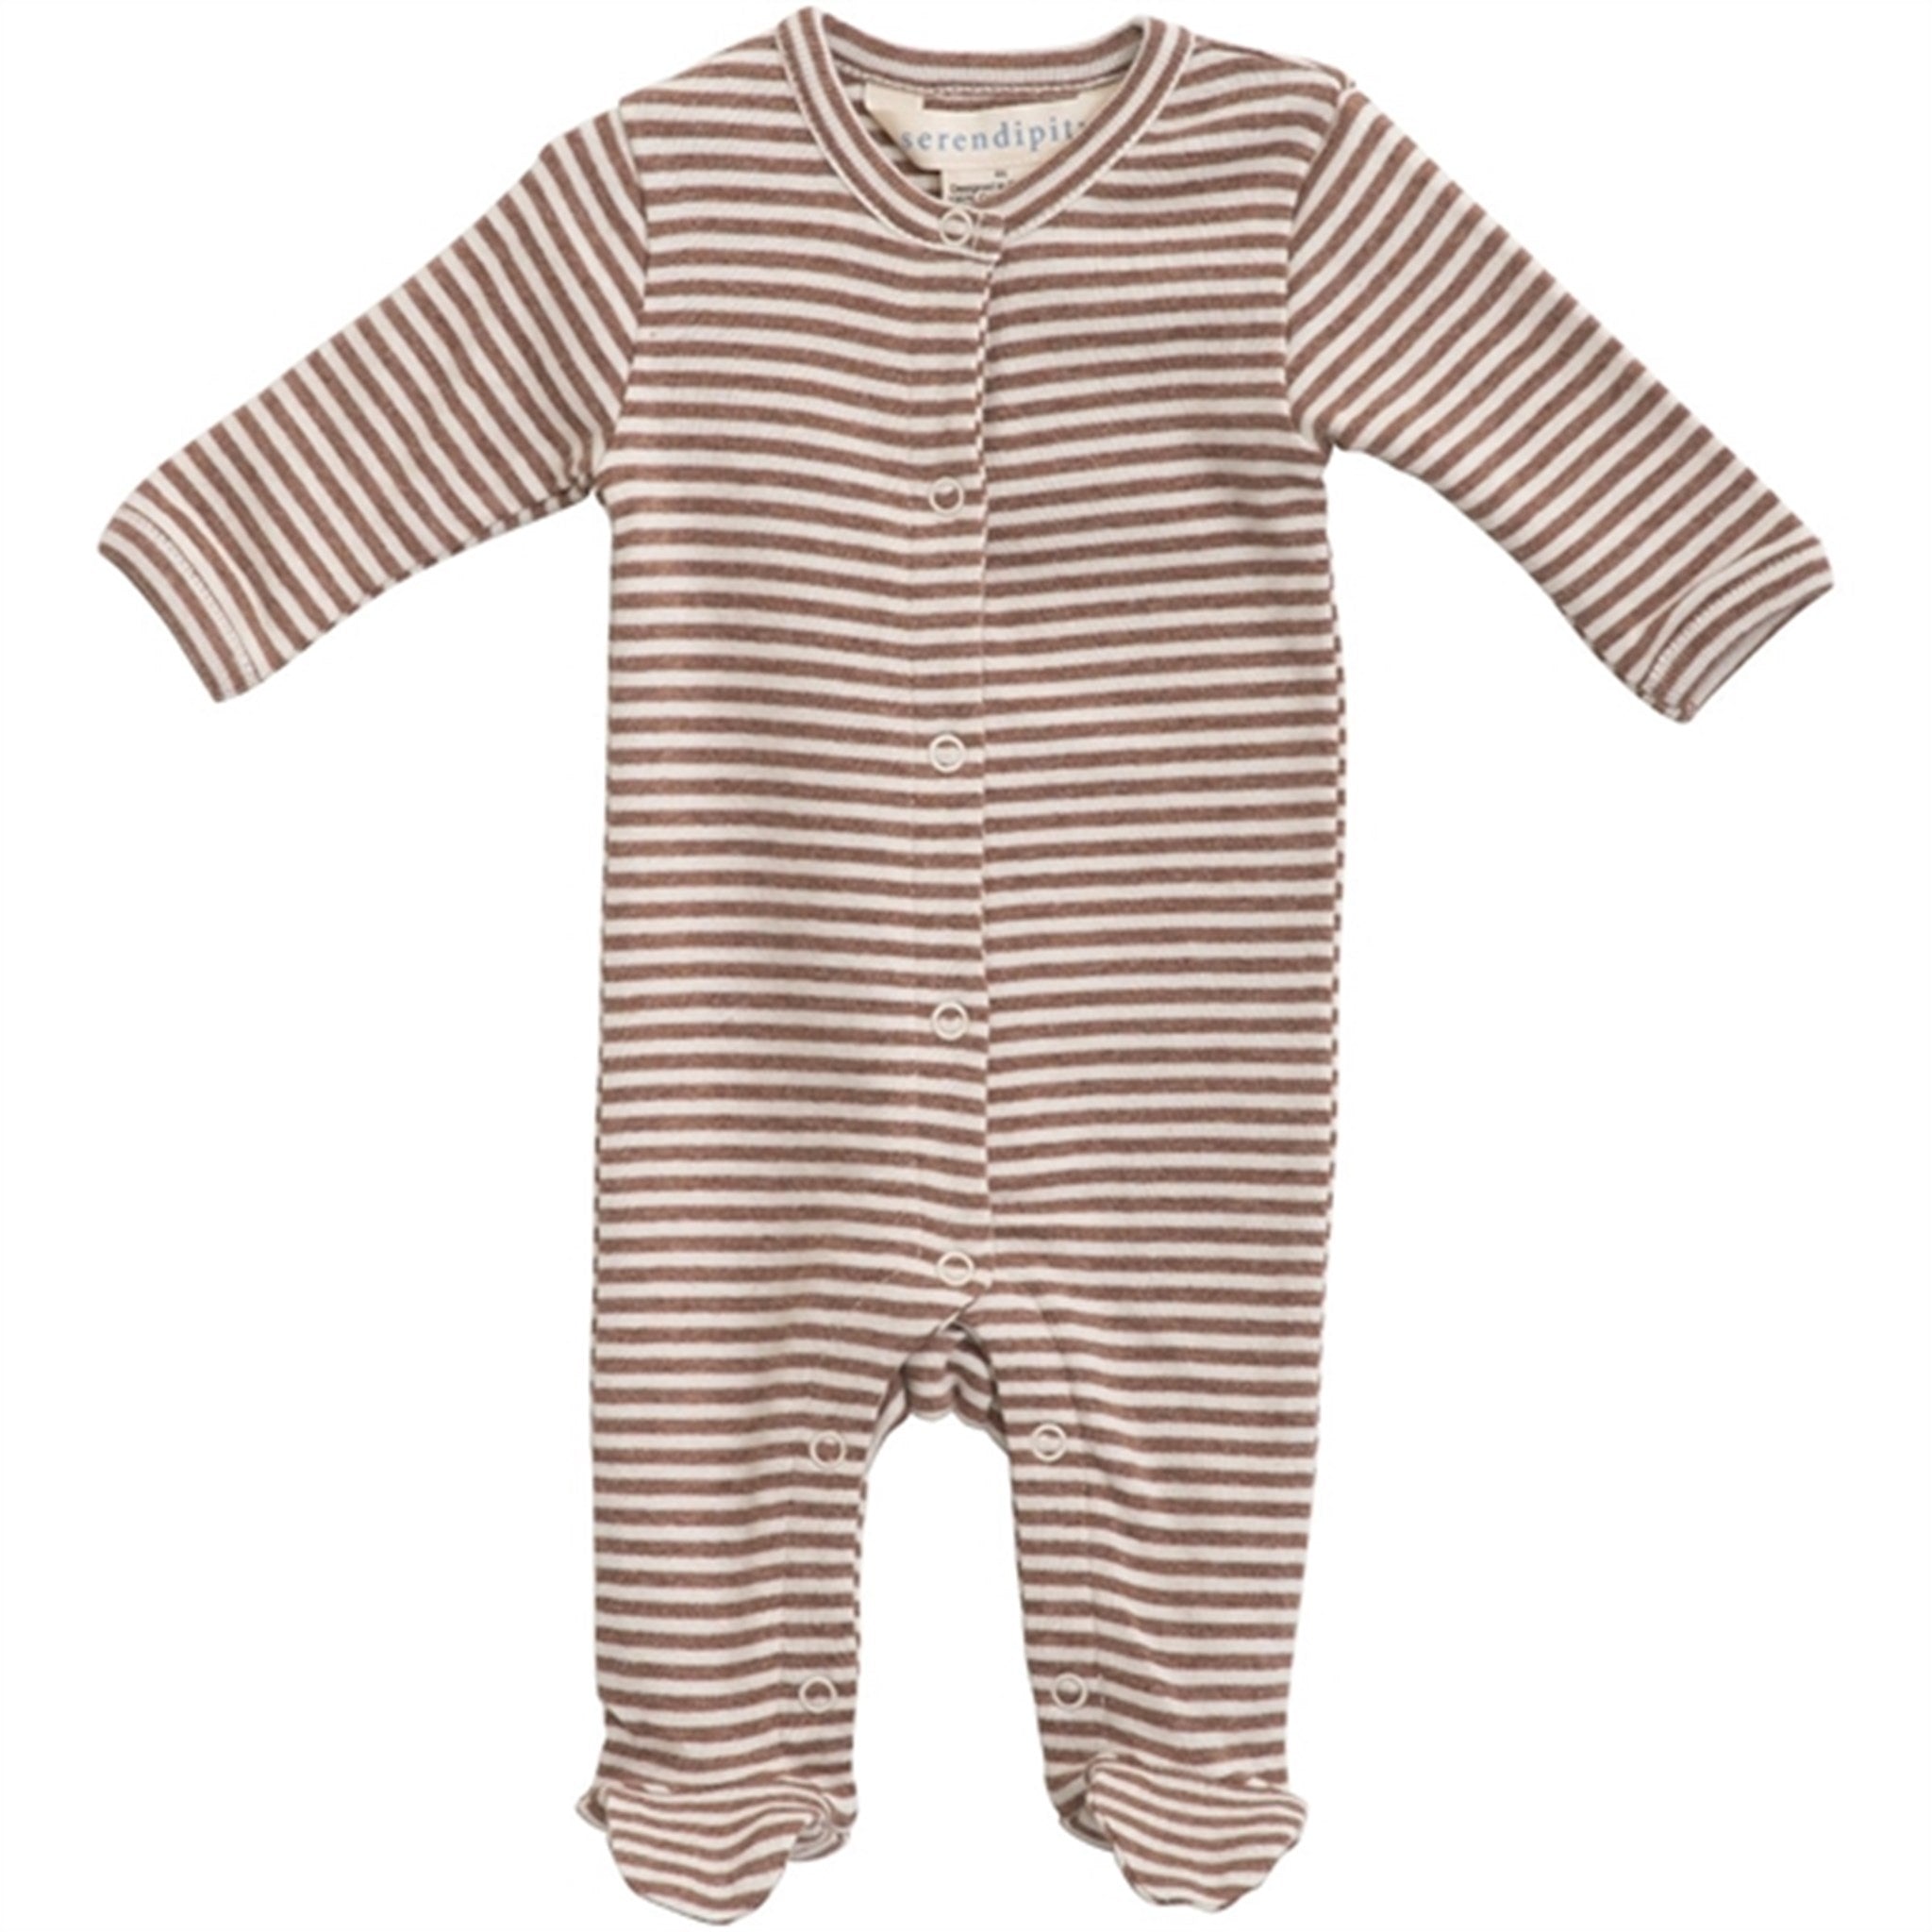 Serendipity Newborn Acorn/Offwhite Stripe Suit w. Feet